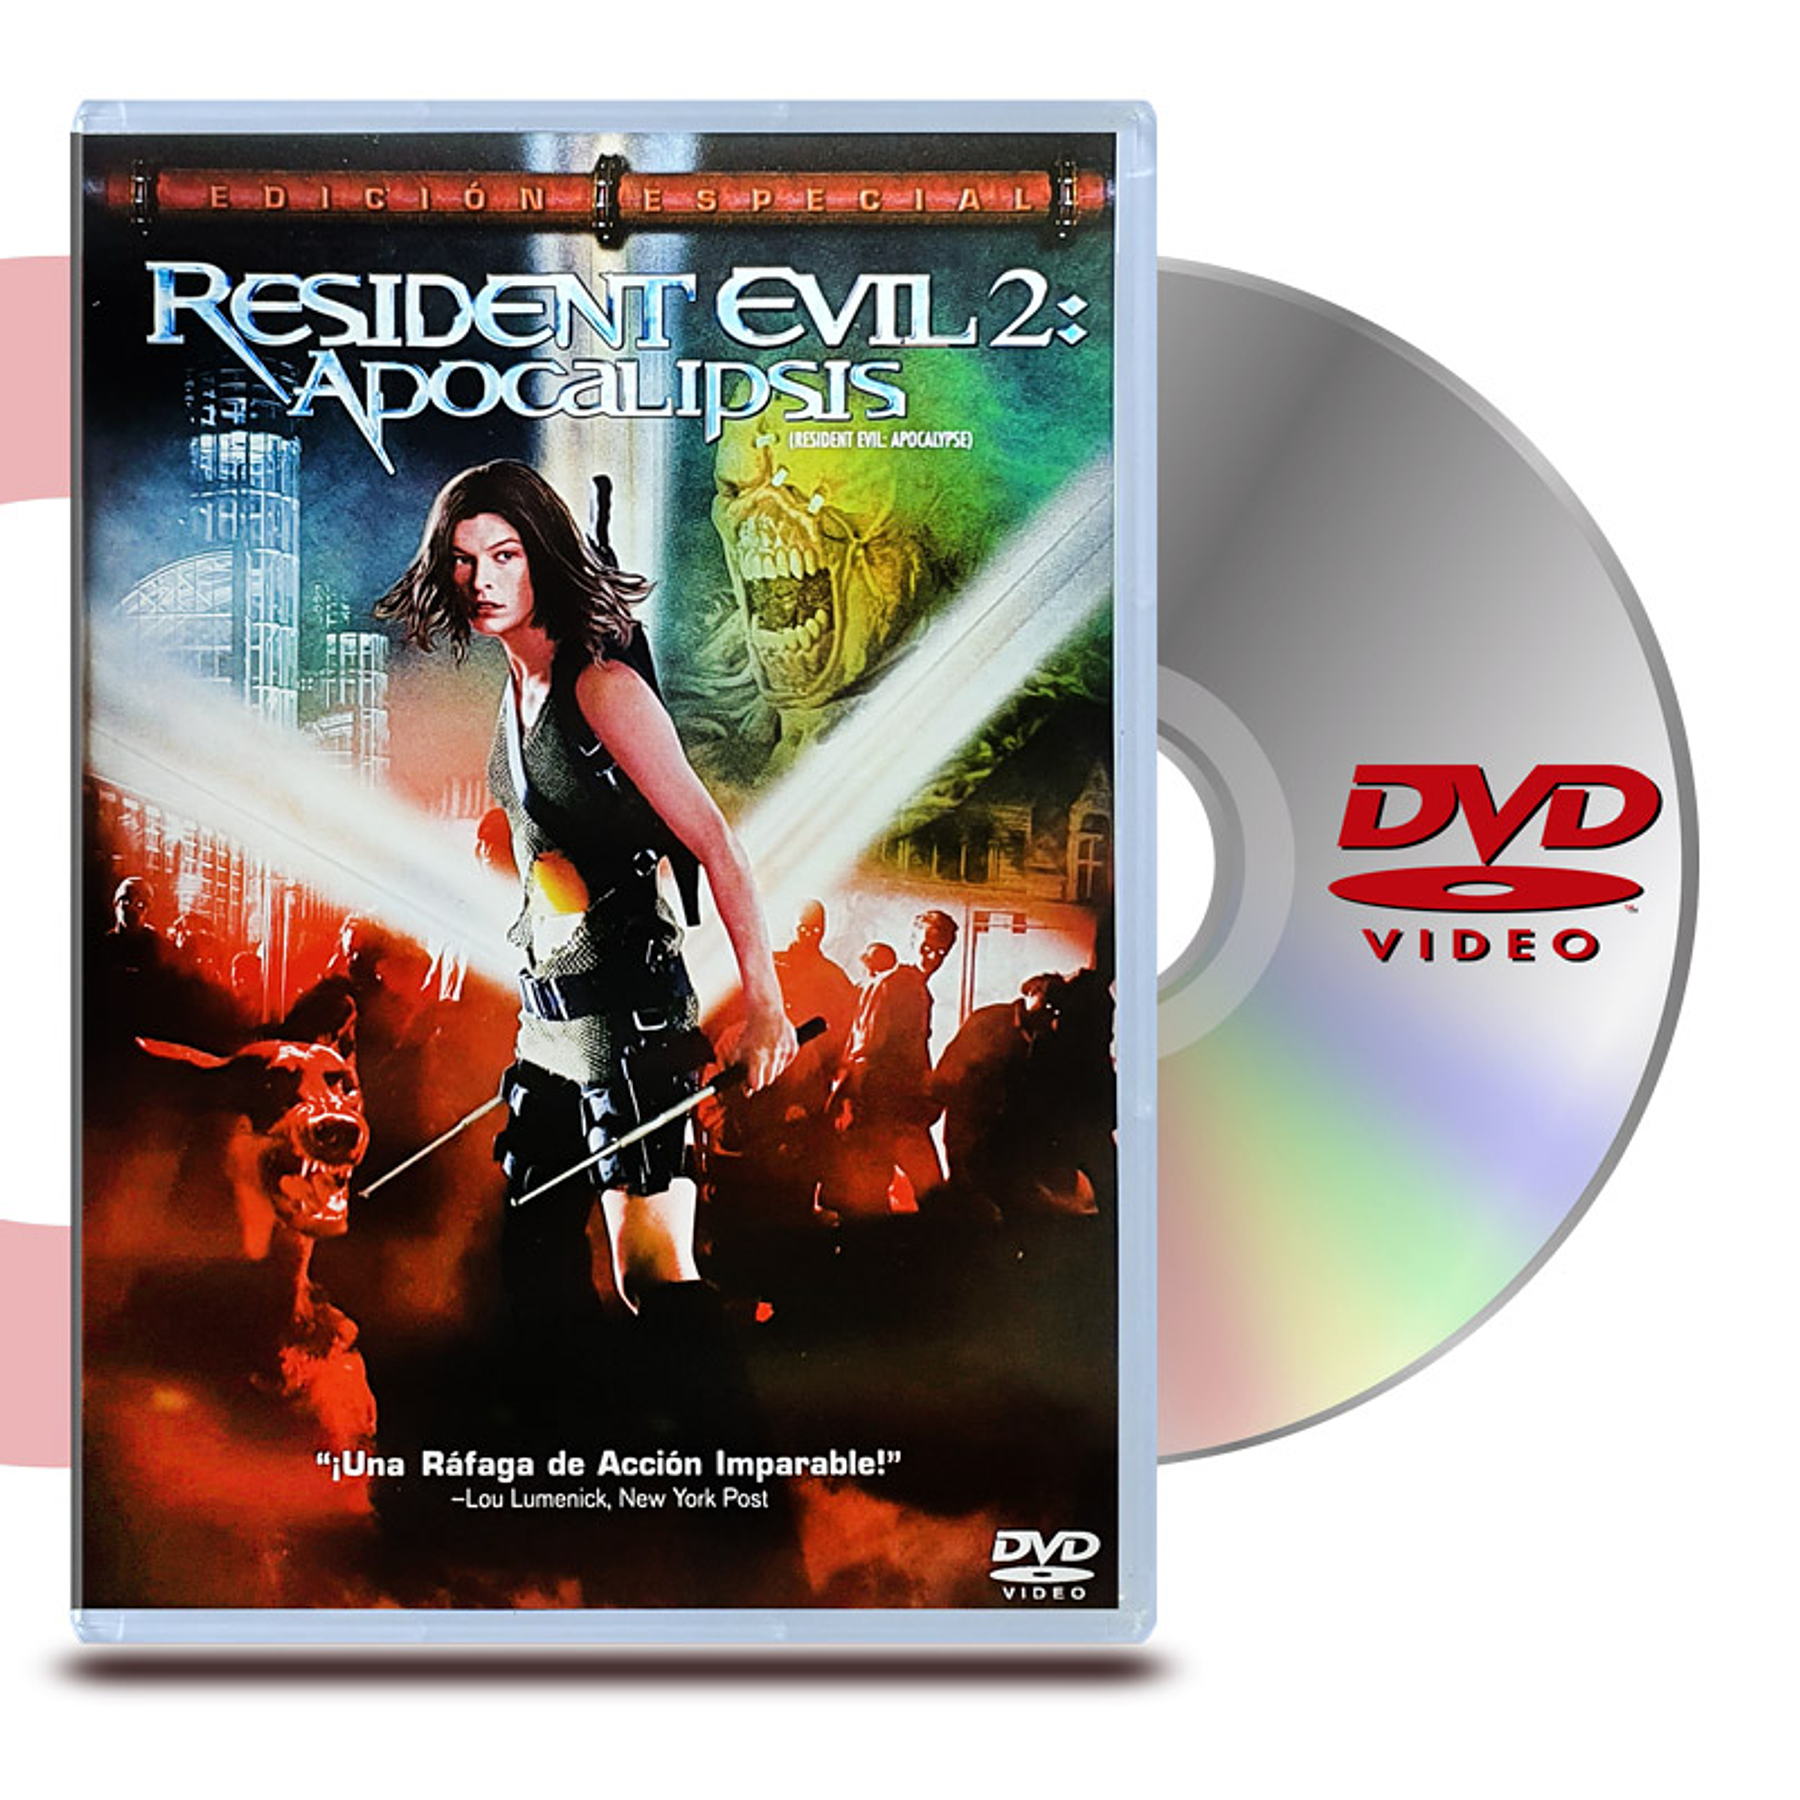 DVD RESIDENT EVIL 2 APOCALIPSIS